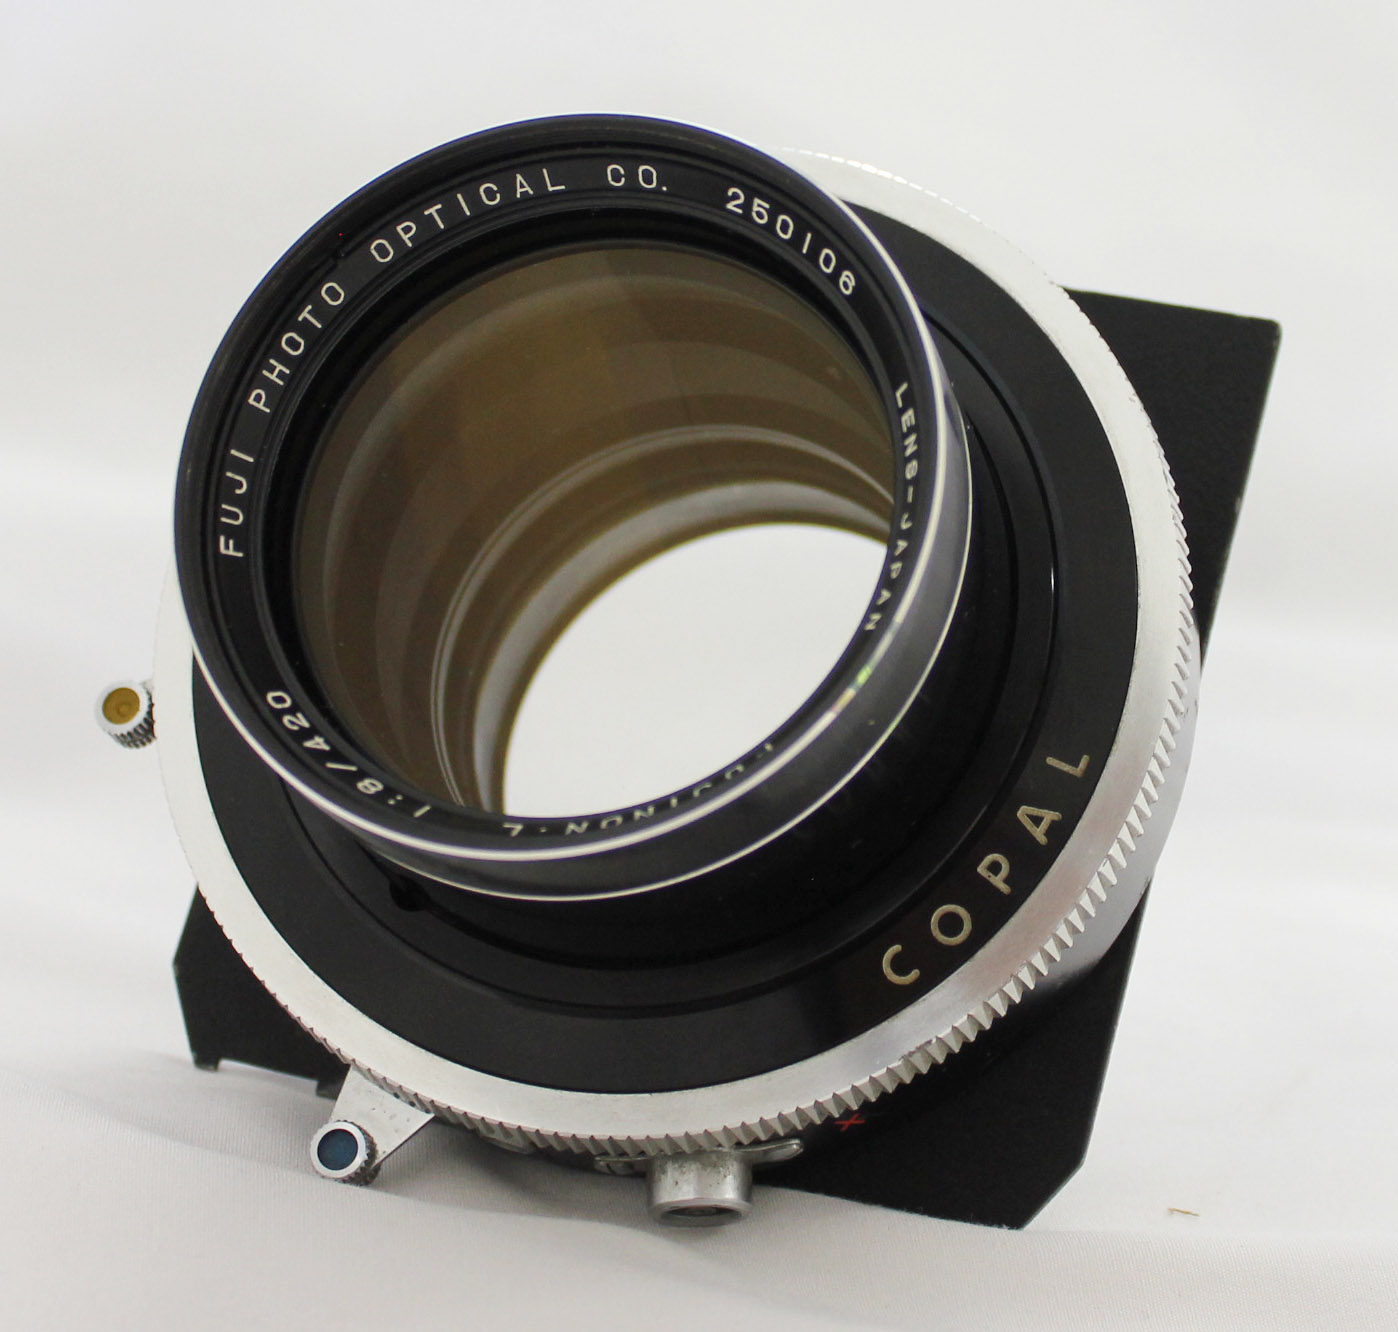 Japan Used Camera Shop | Fuji Fujinon L 420mm F/8 8x10 4x5 Lens w/ Copal No.3 Linhof Board from Japan